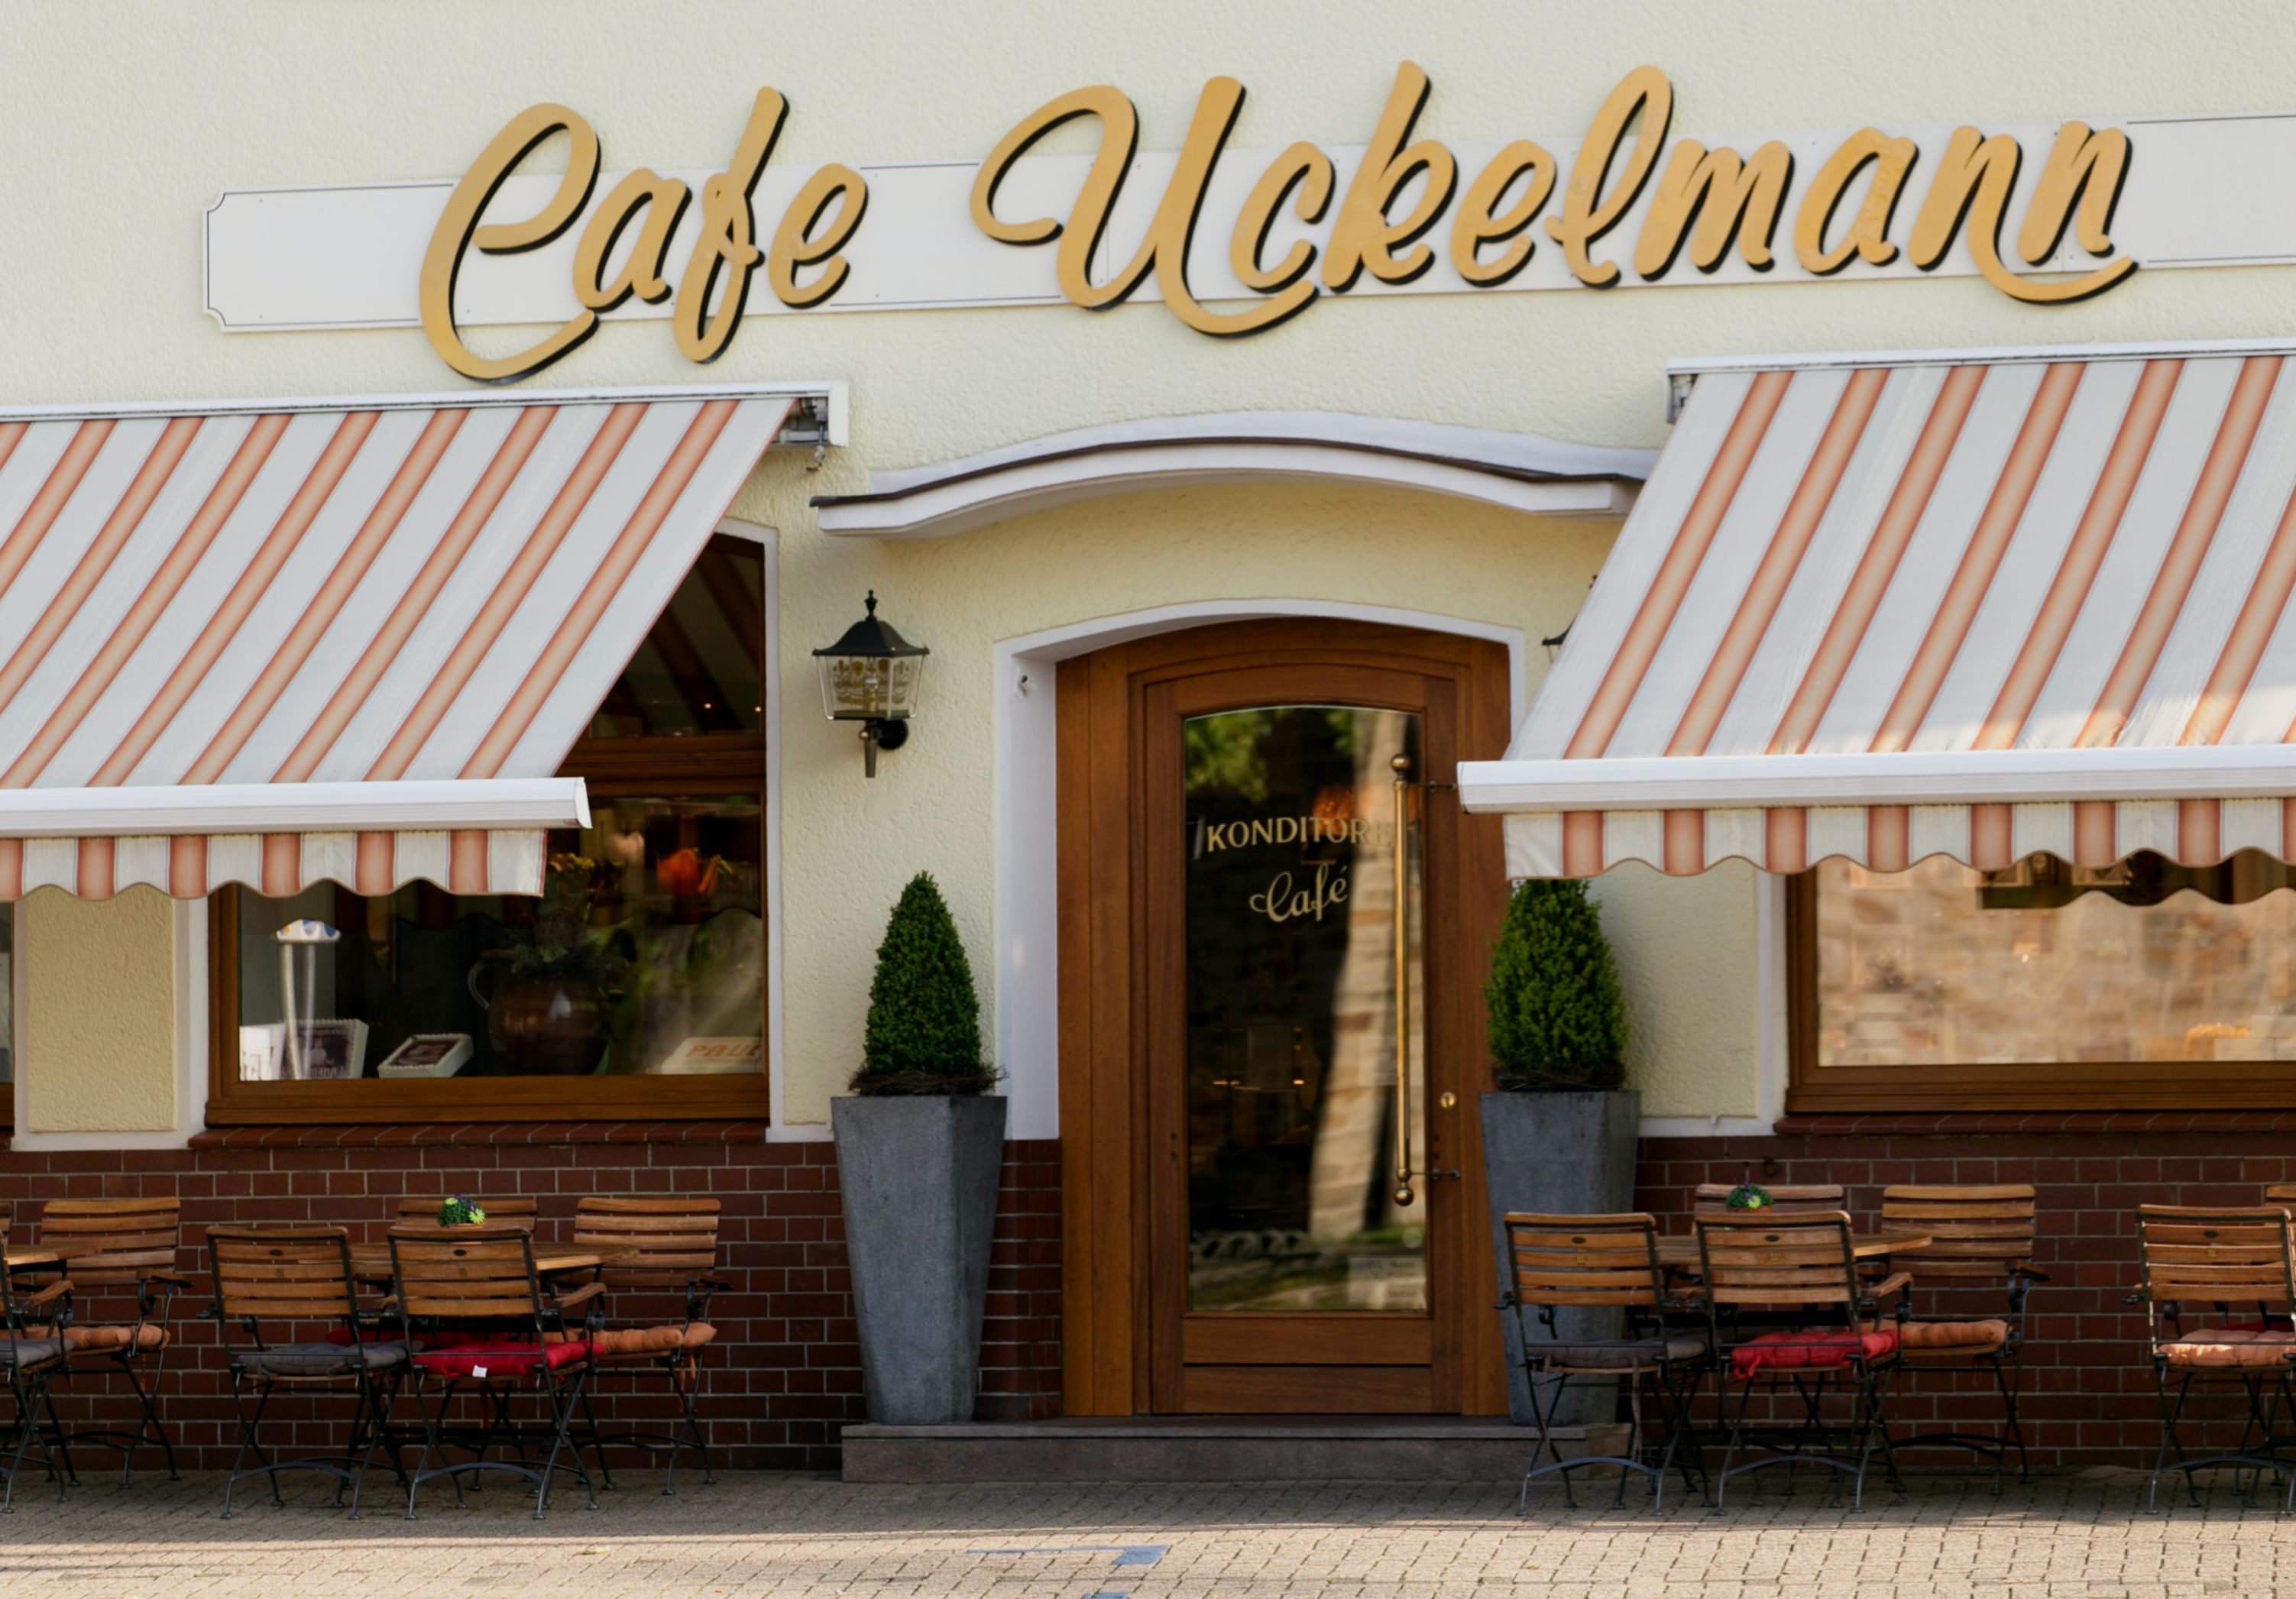 Cafe Konditorei Glühweinmanufaktur Uckelmann